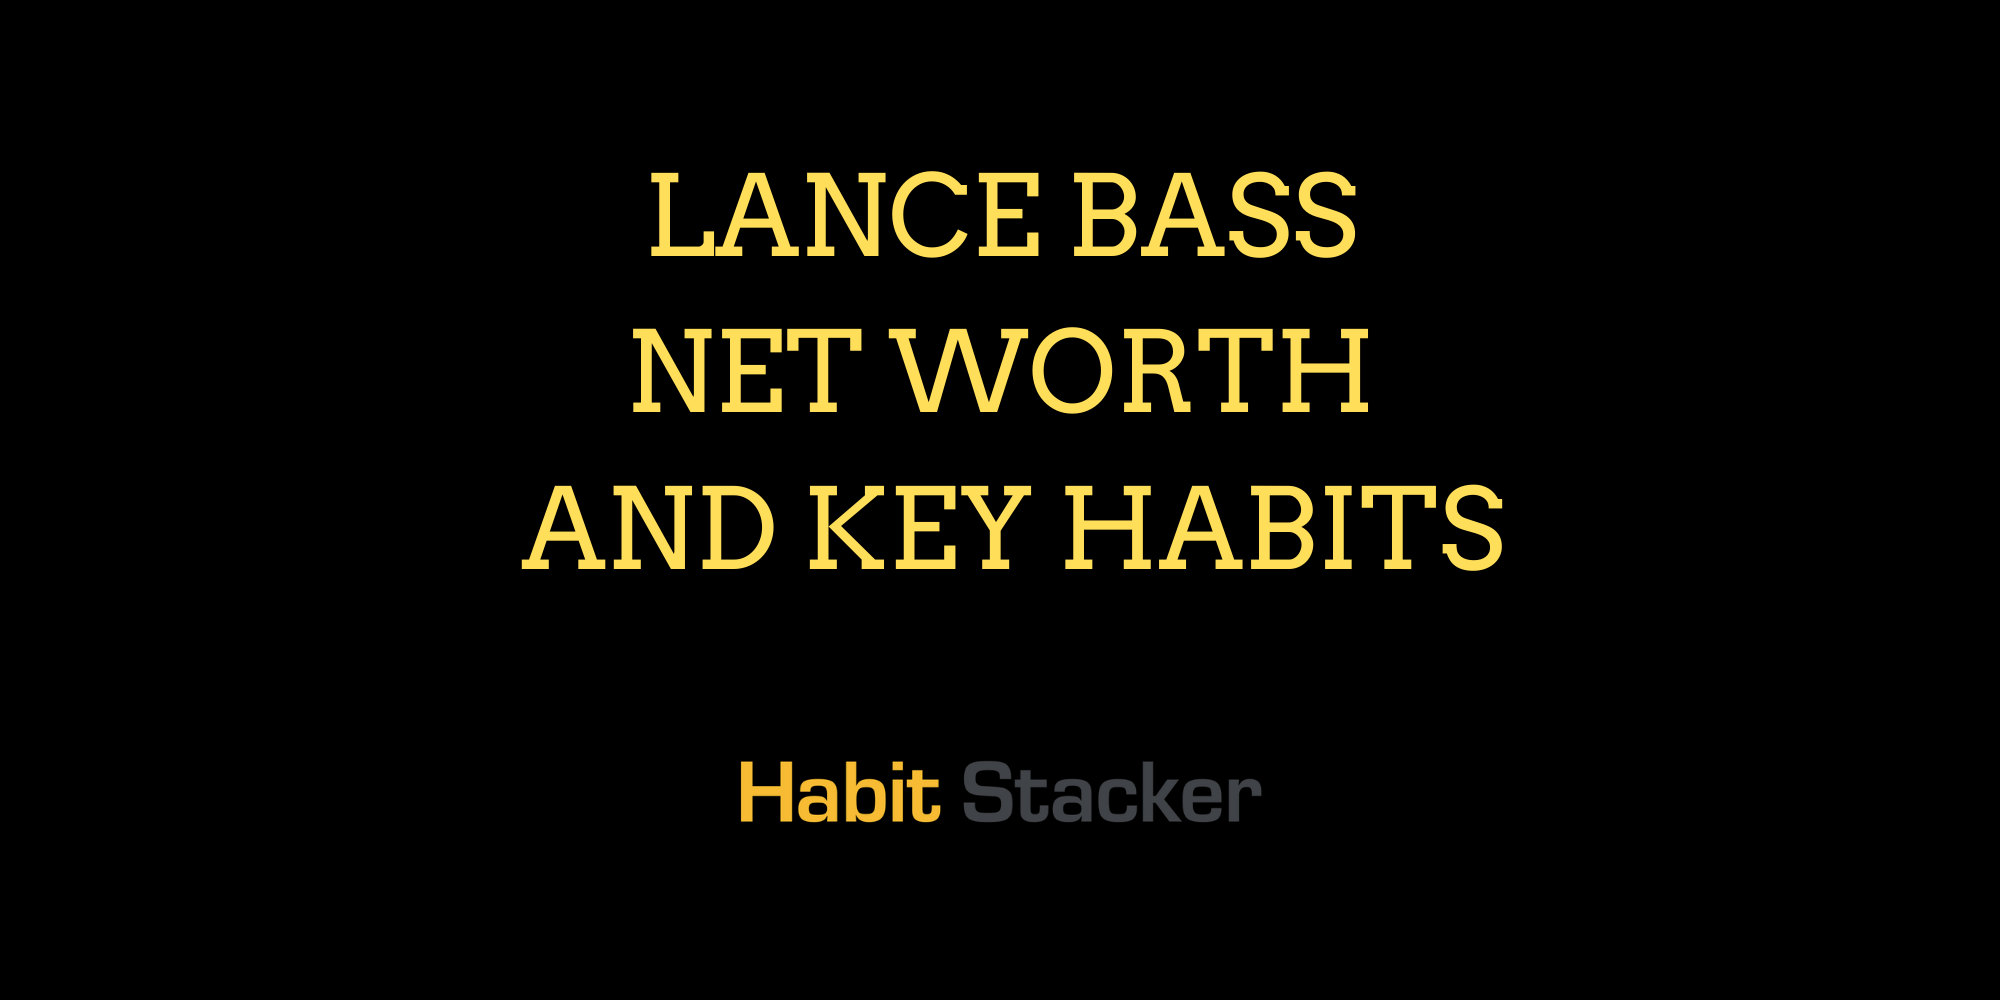 Lance Bass Net Worth and Key Habits